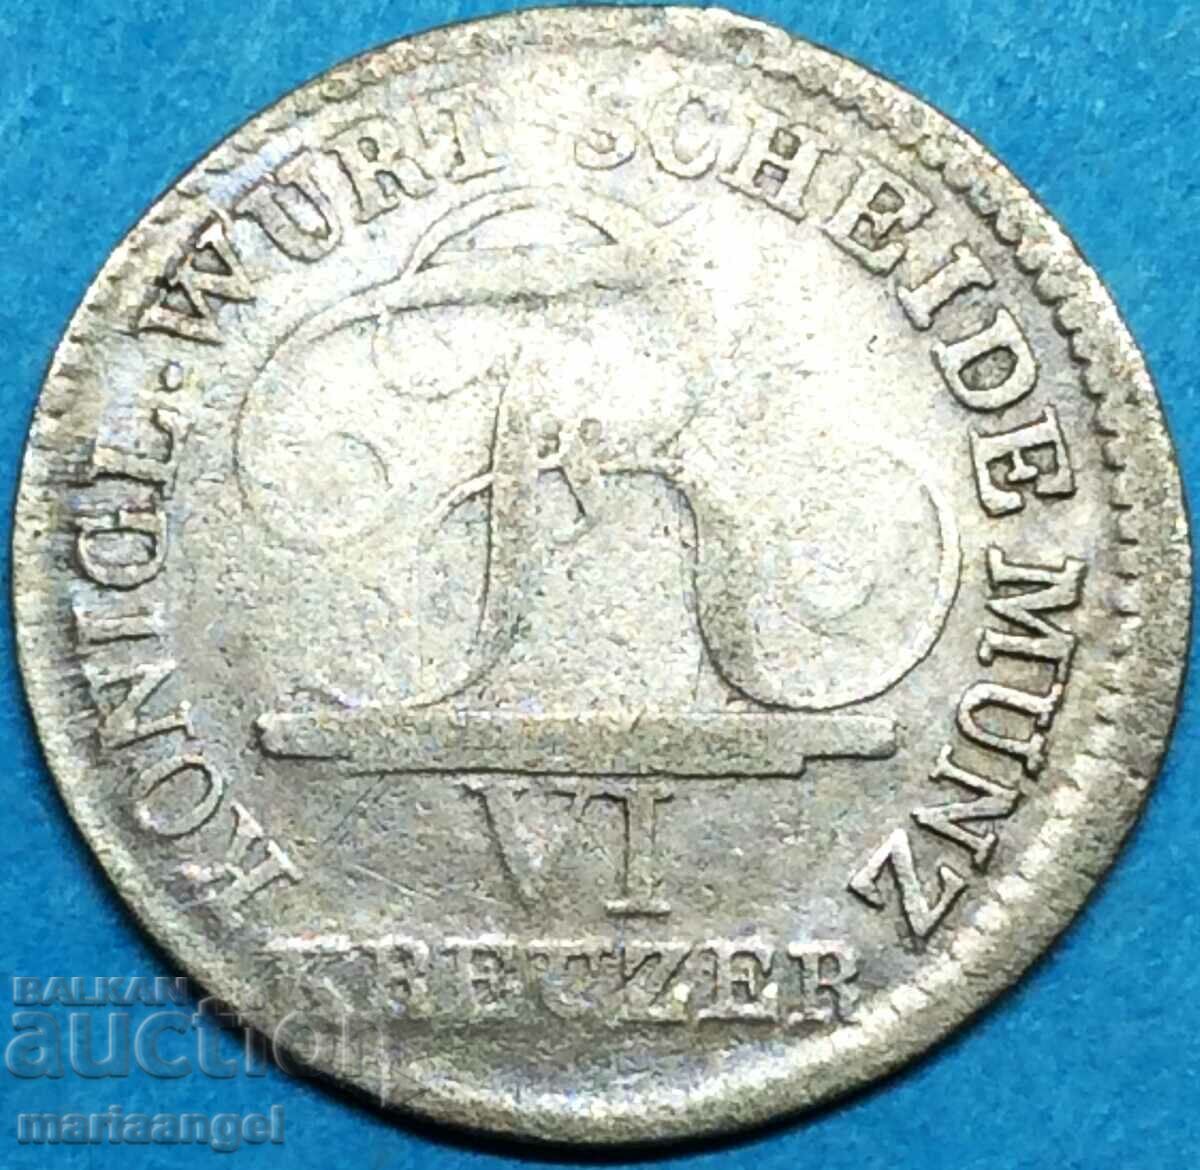 Württemberg 6 Kreuzer 1808 Germany silver